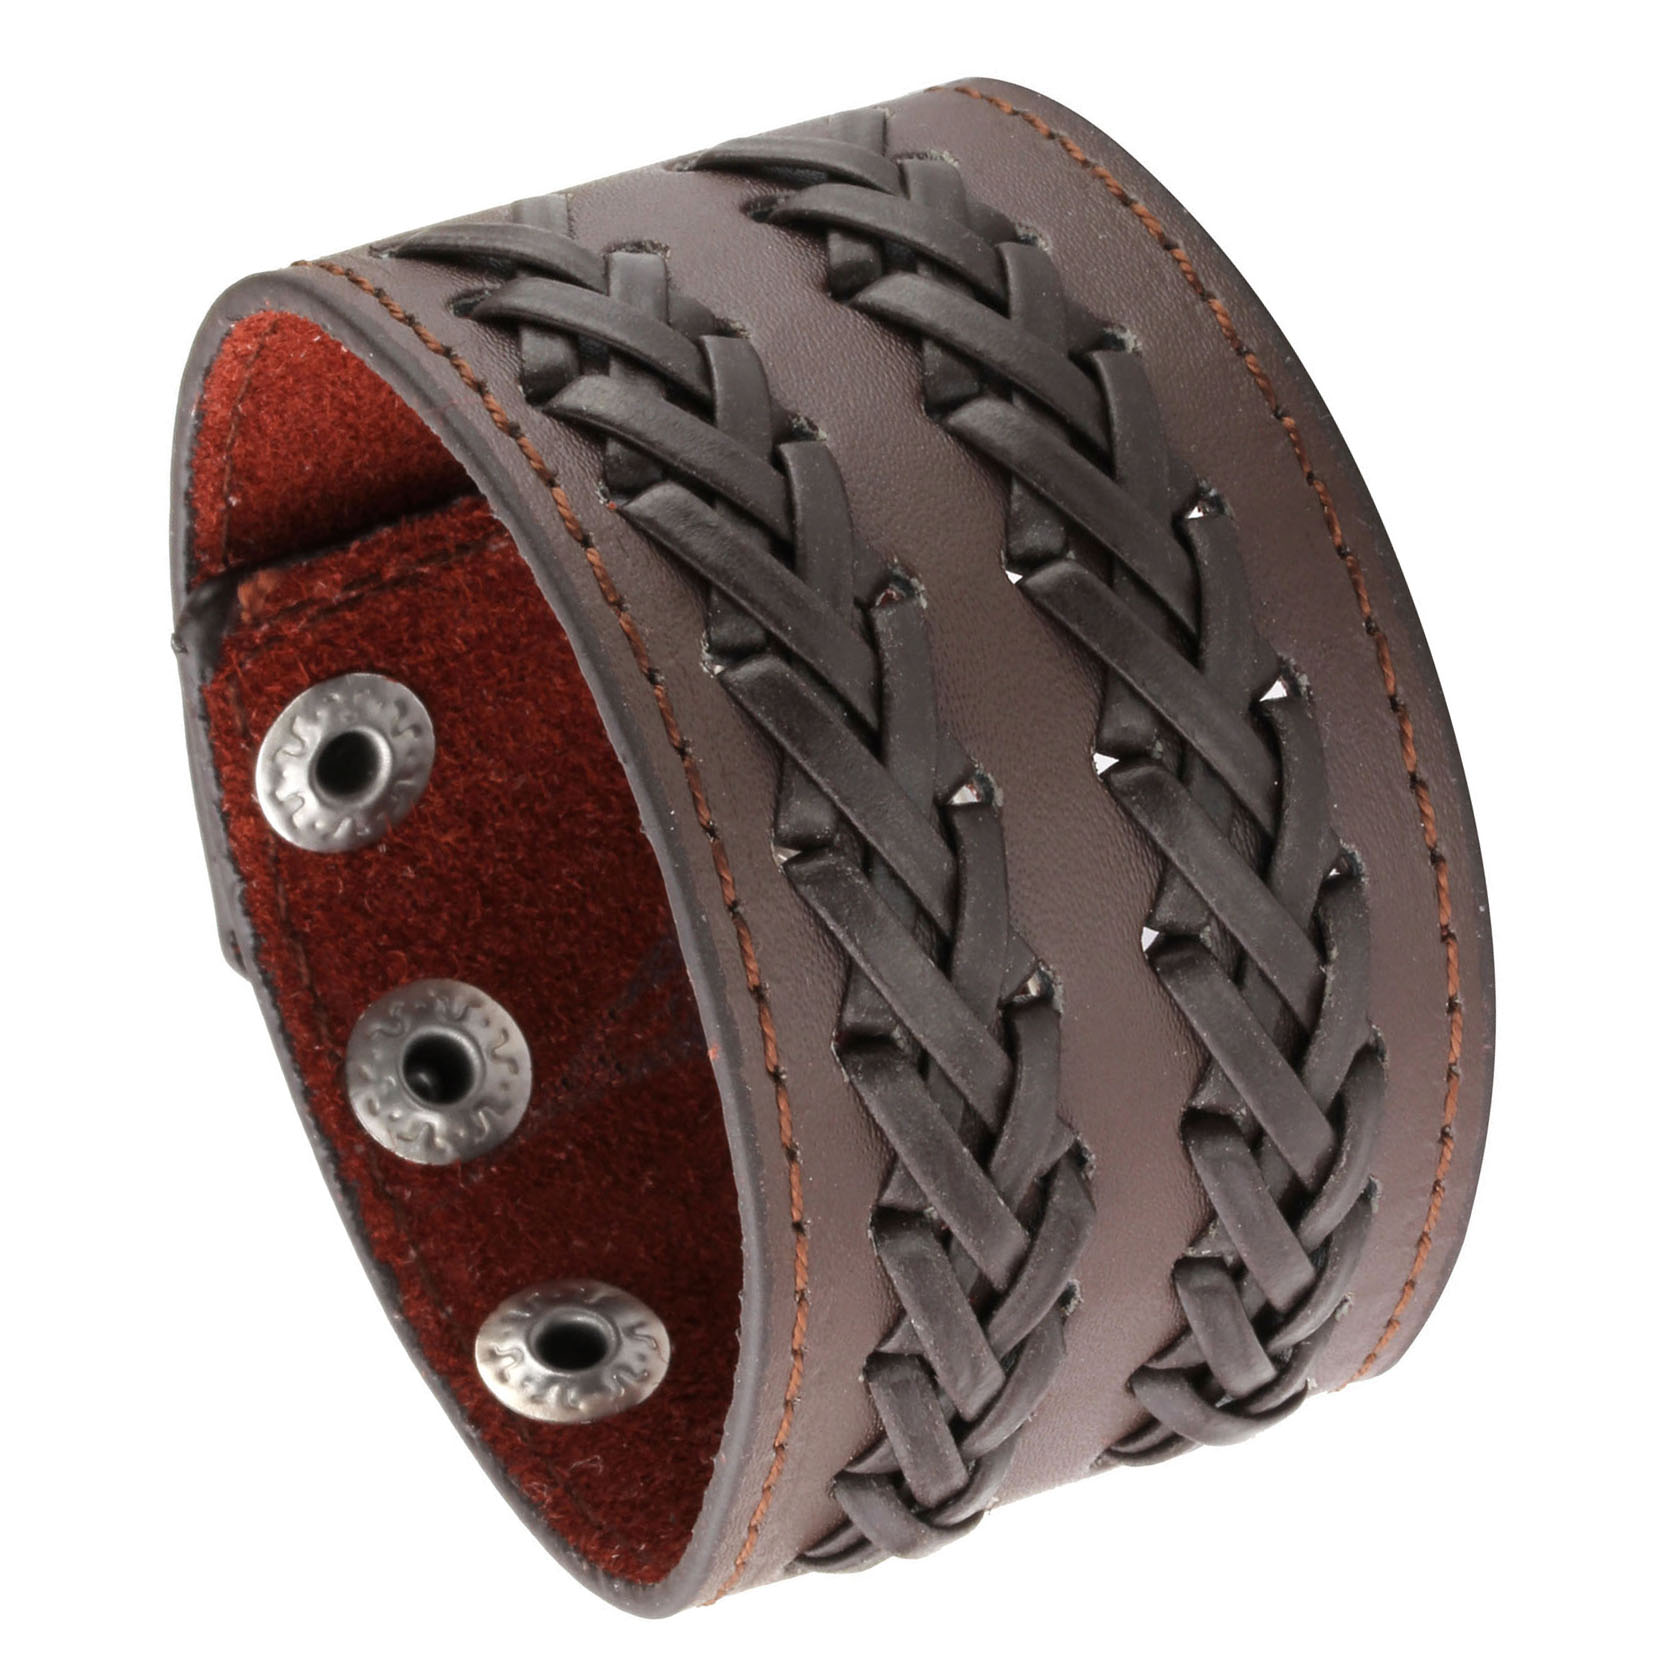 Goth style bracelet faux leather biker wide woven buckle cuff wristband